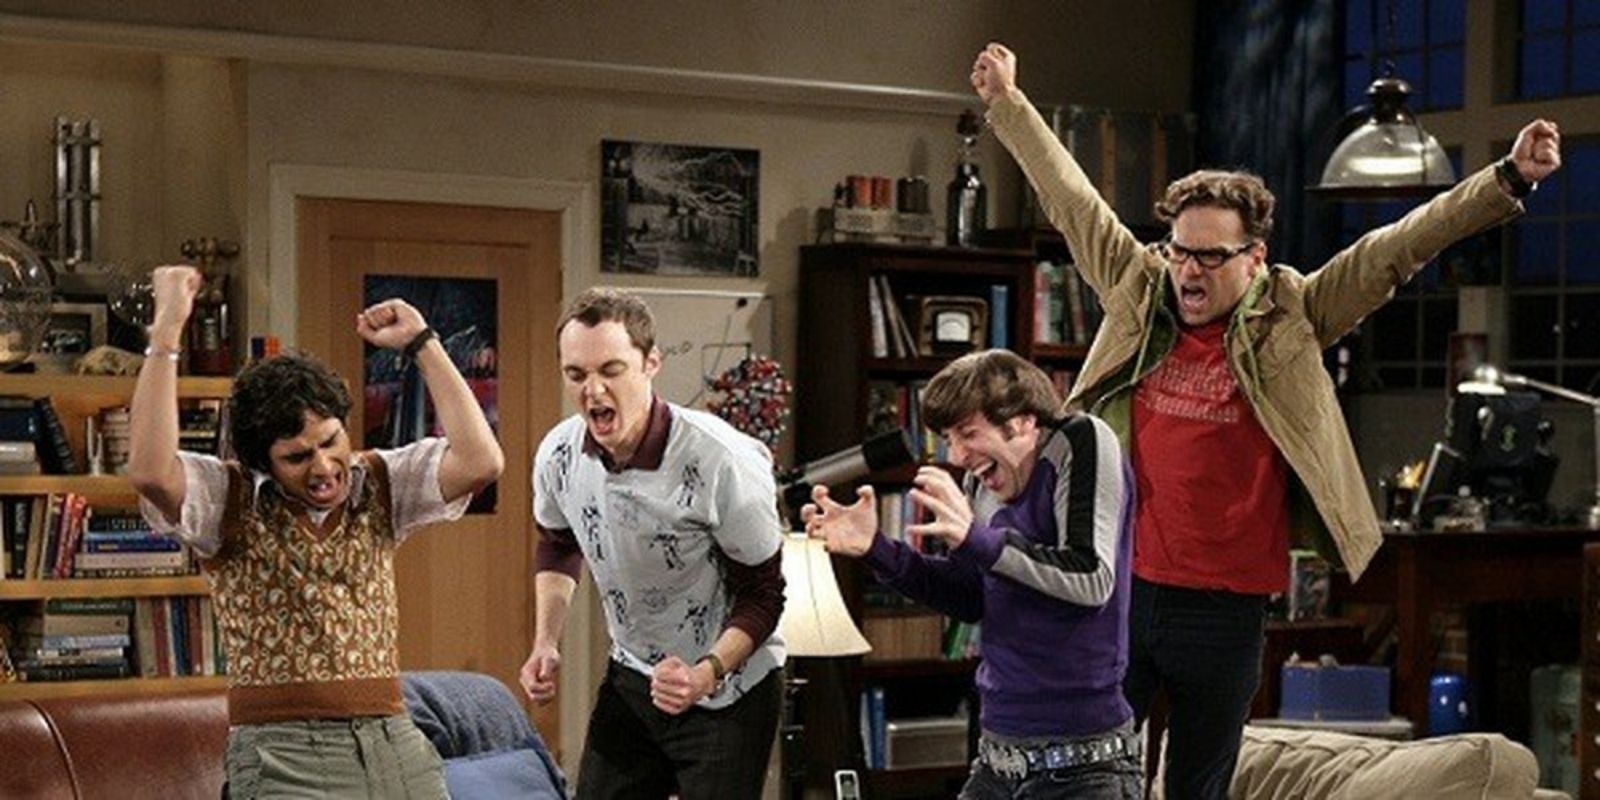 The Big Bang Theory Guys Dancing and celebrating.